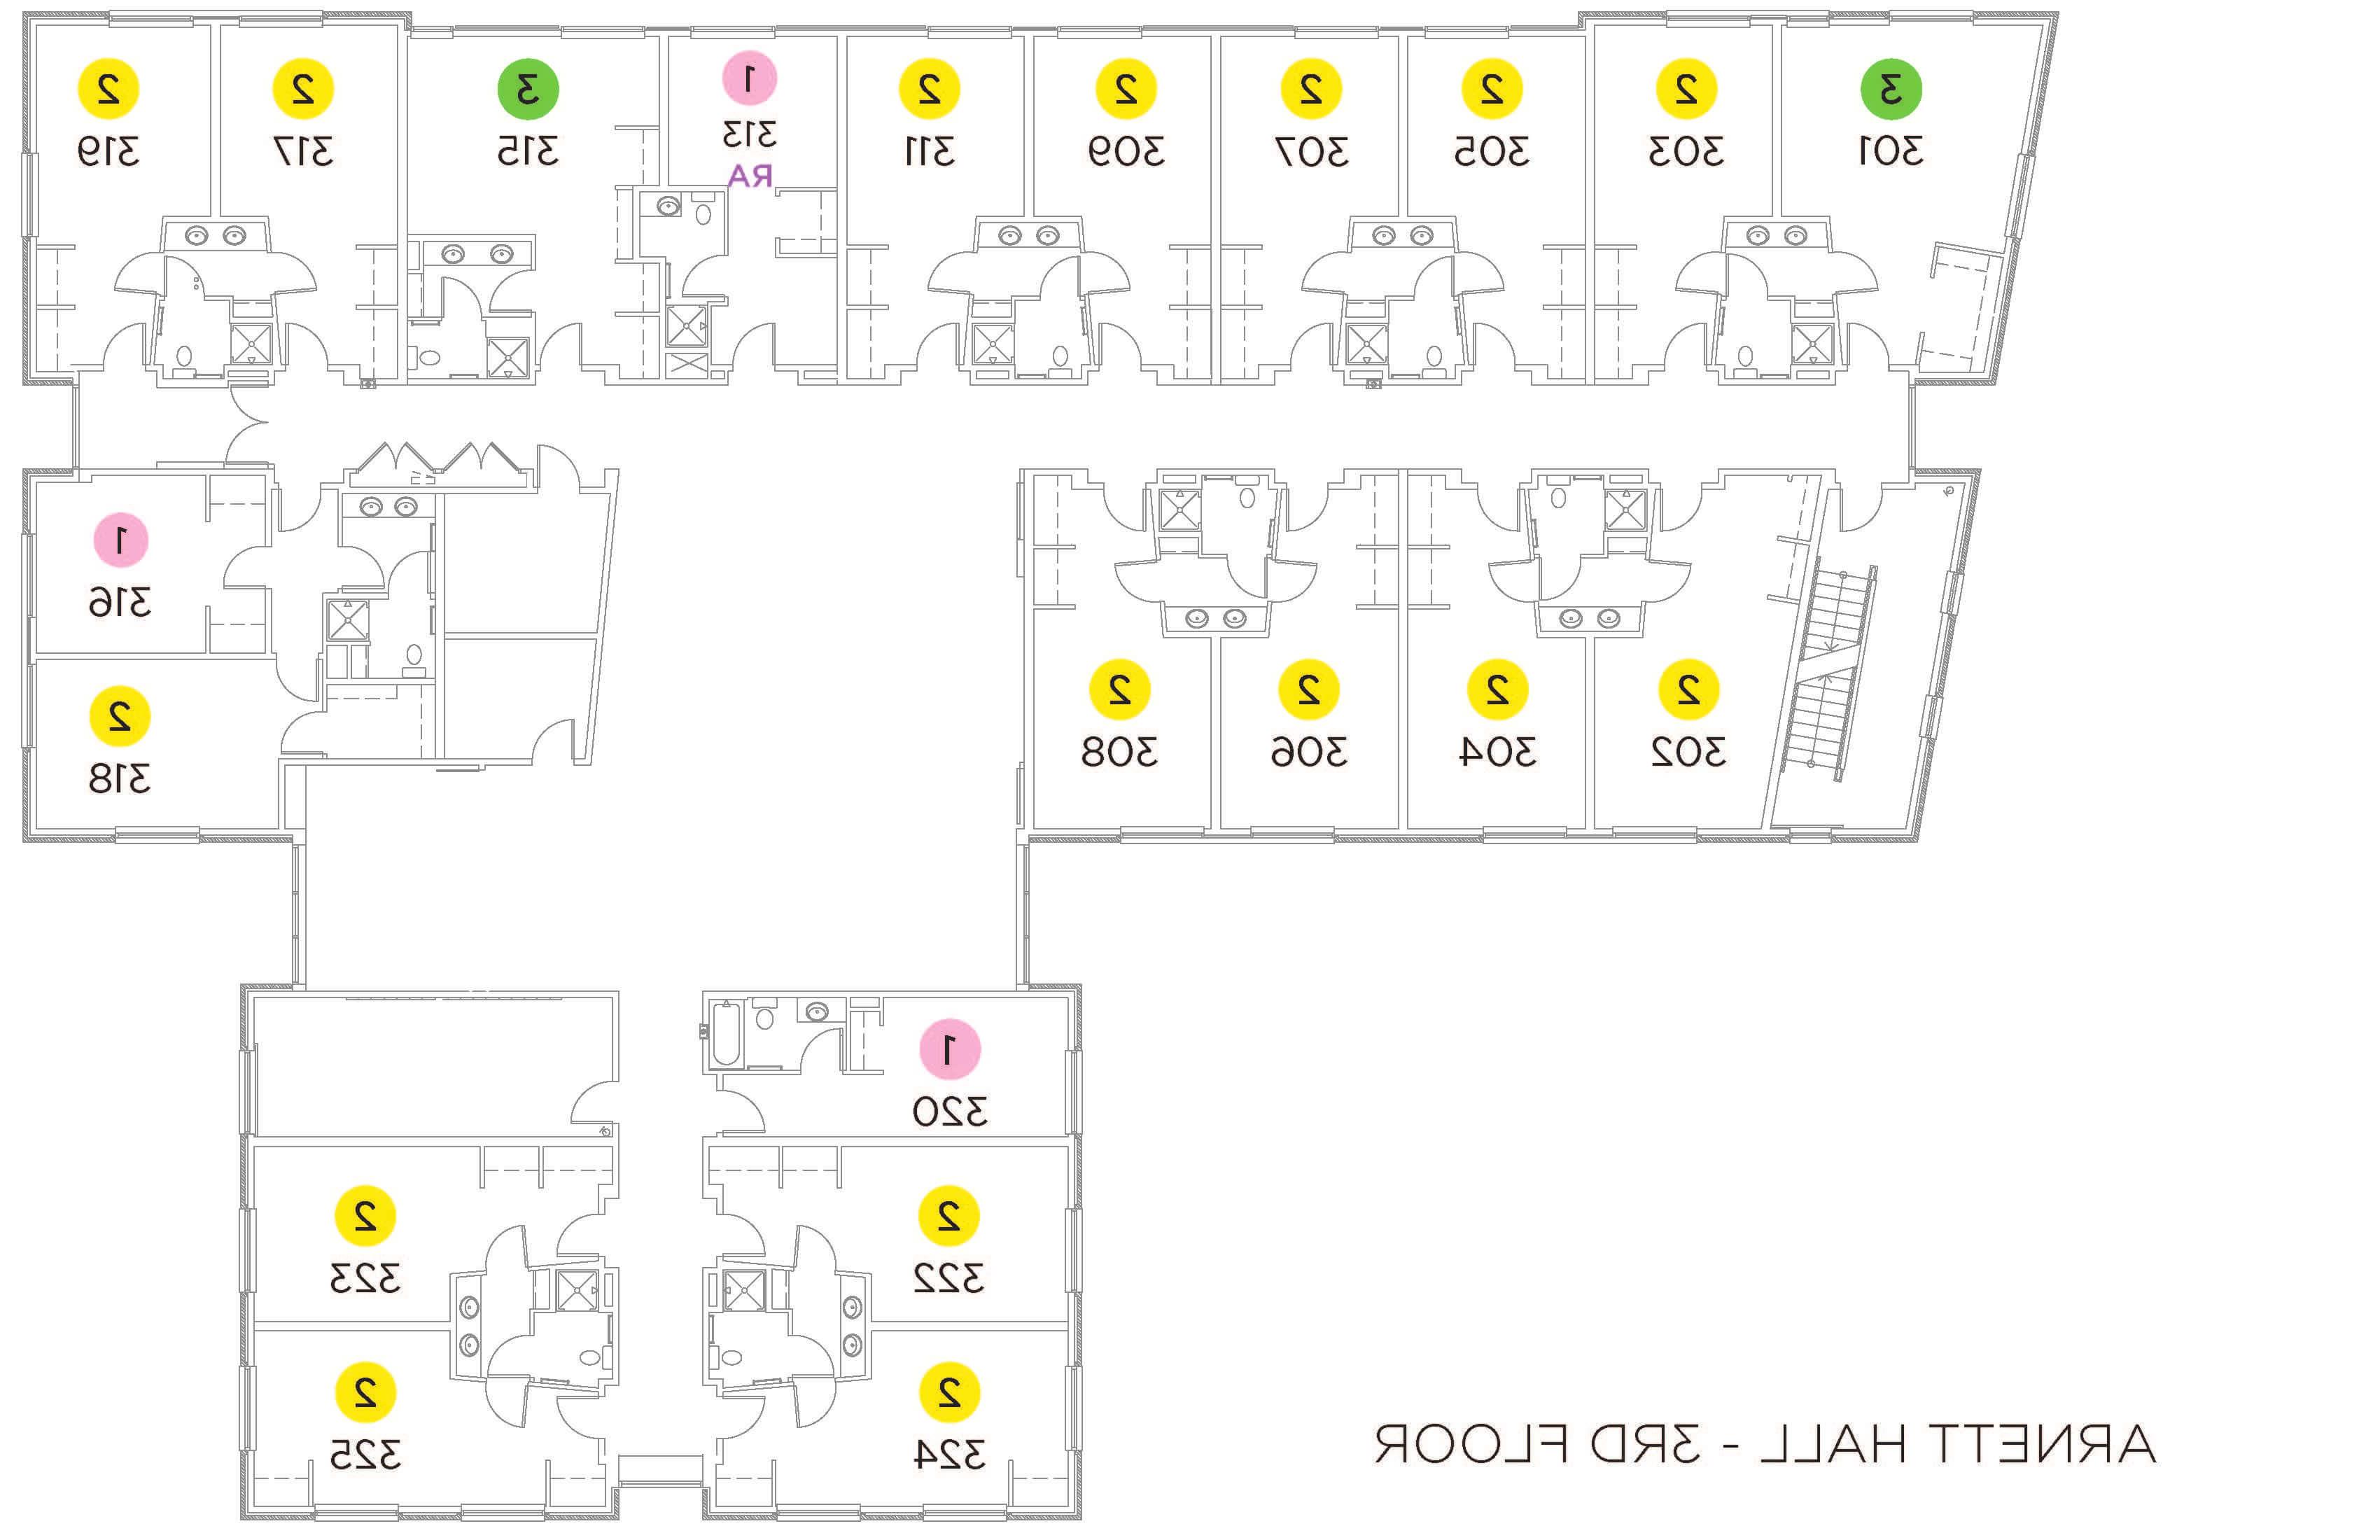 Floor plan layout